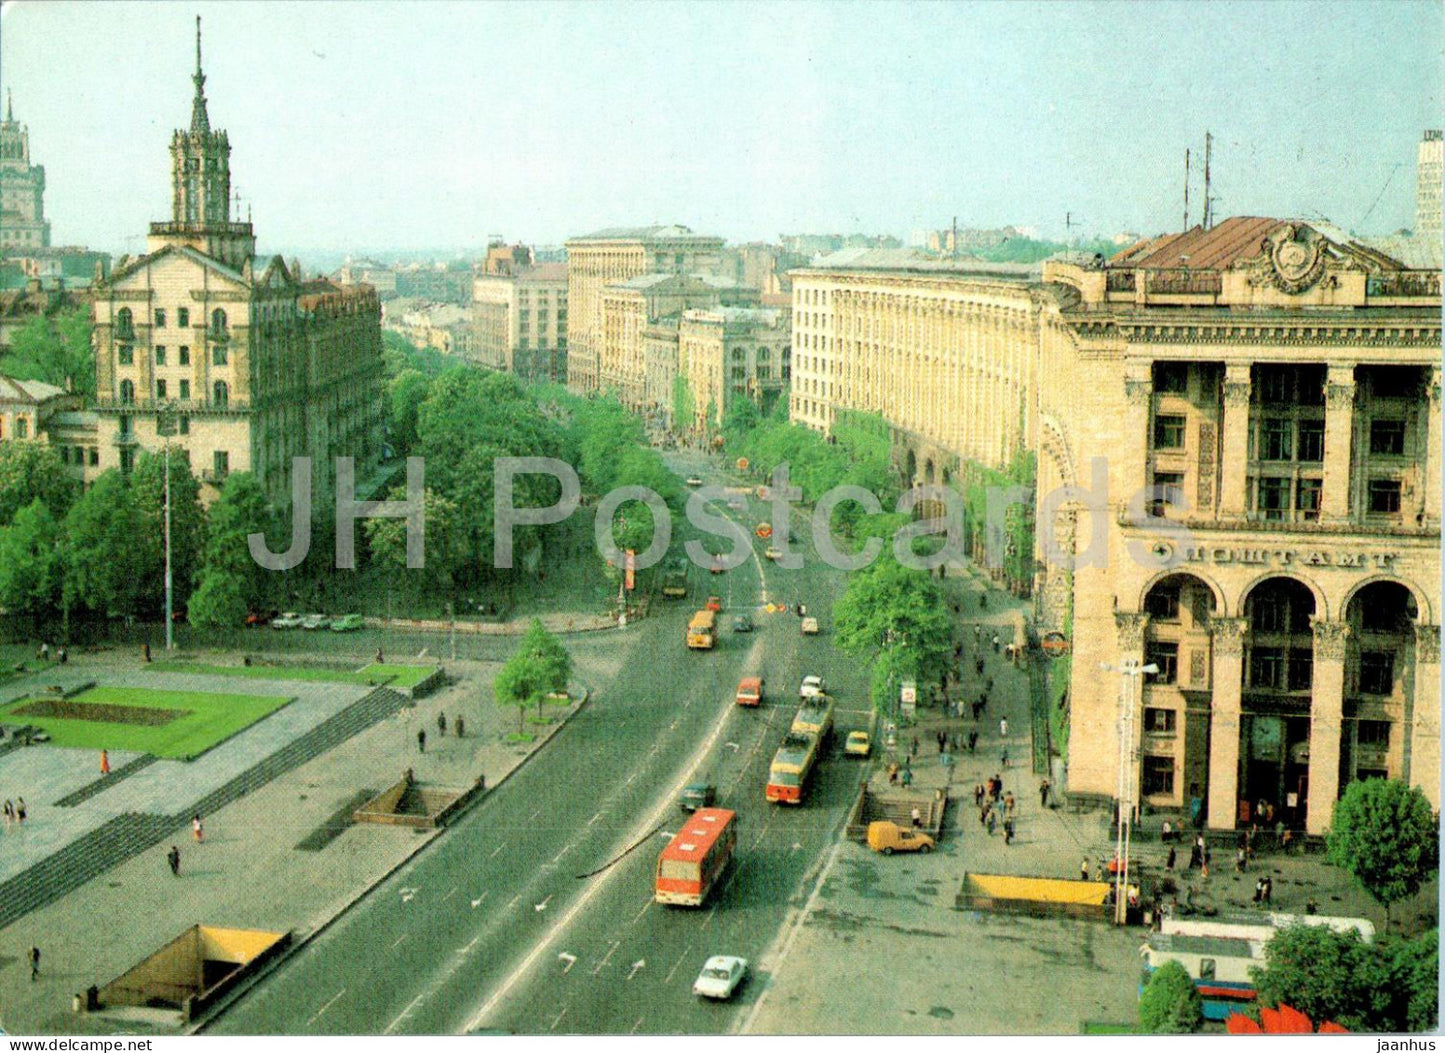 Kyiv - Kiev - Khreschatyk Street - 1989 - Ukraine USSR - unused - JH Postcards